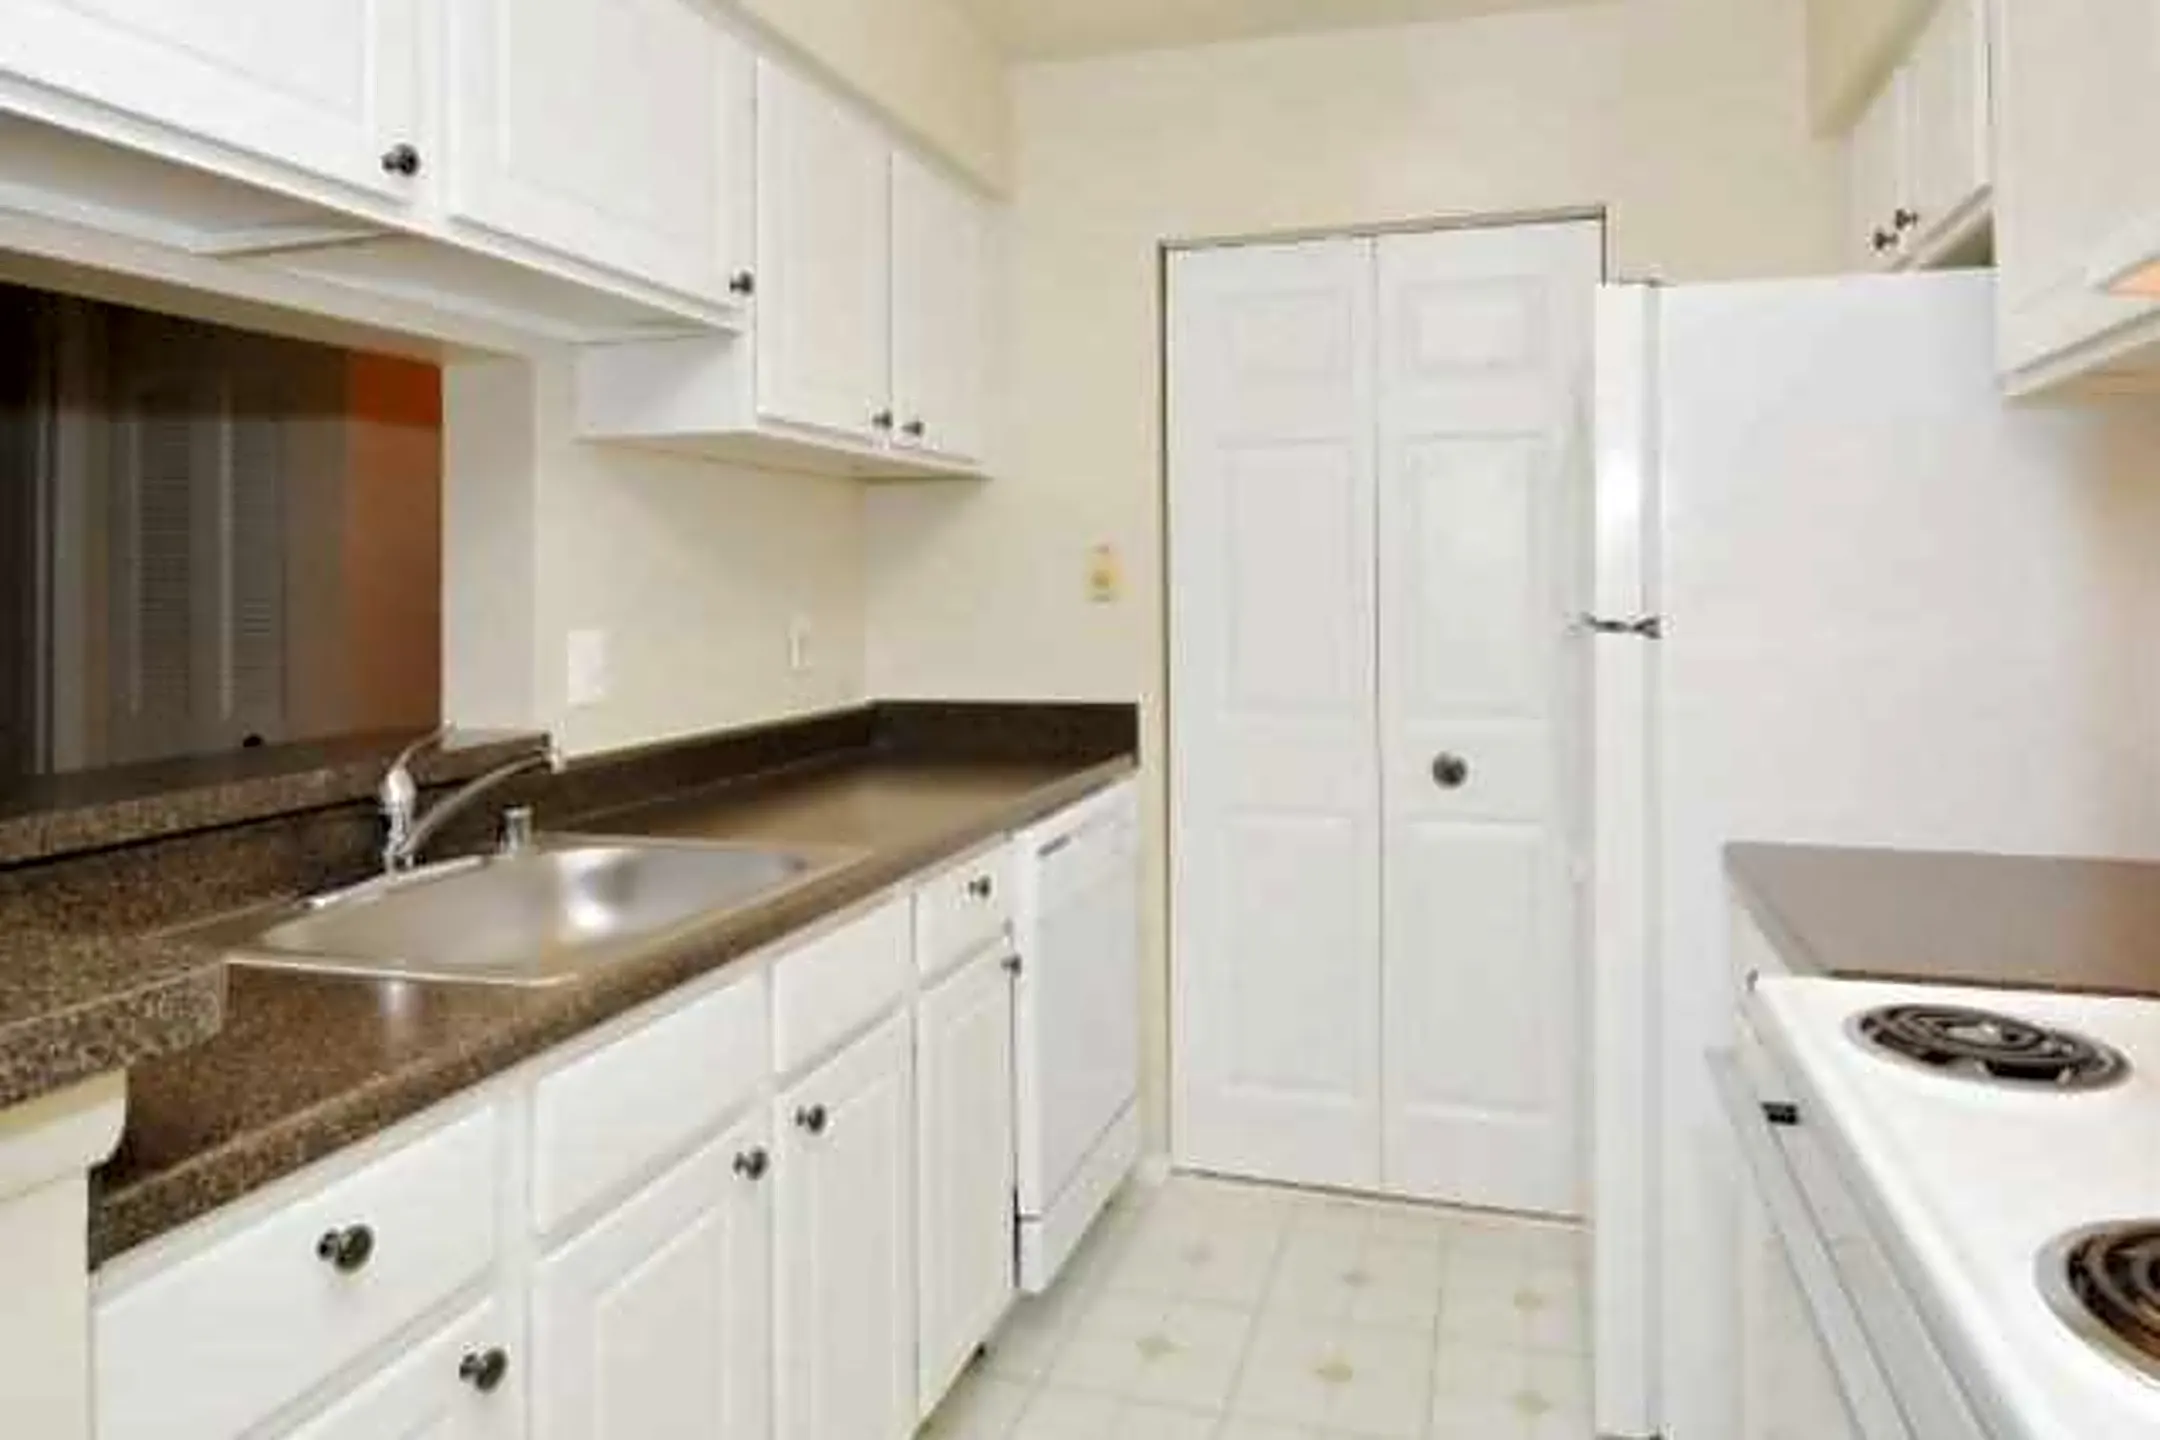 Kitchen - Spring House Apartments - Laurel, MD